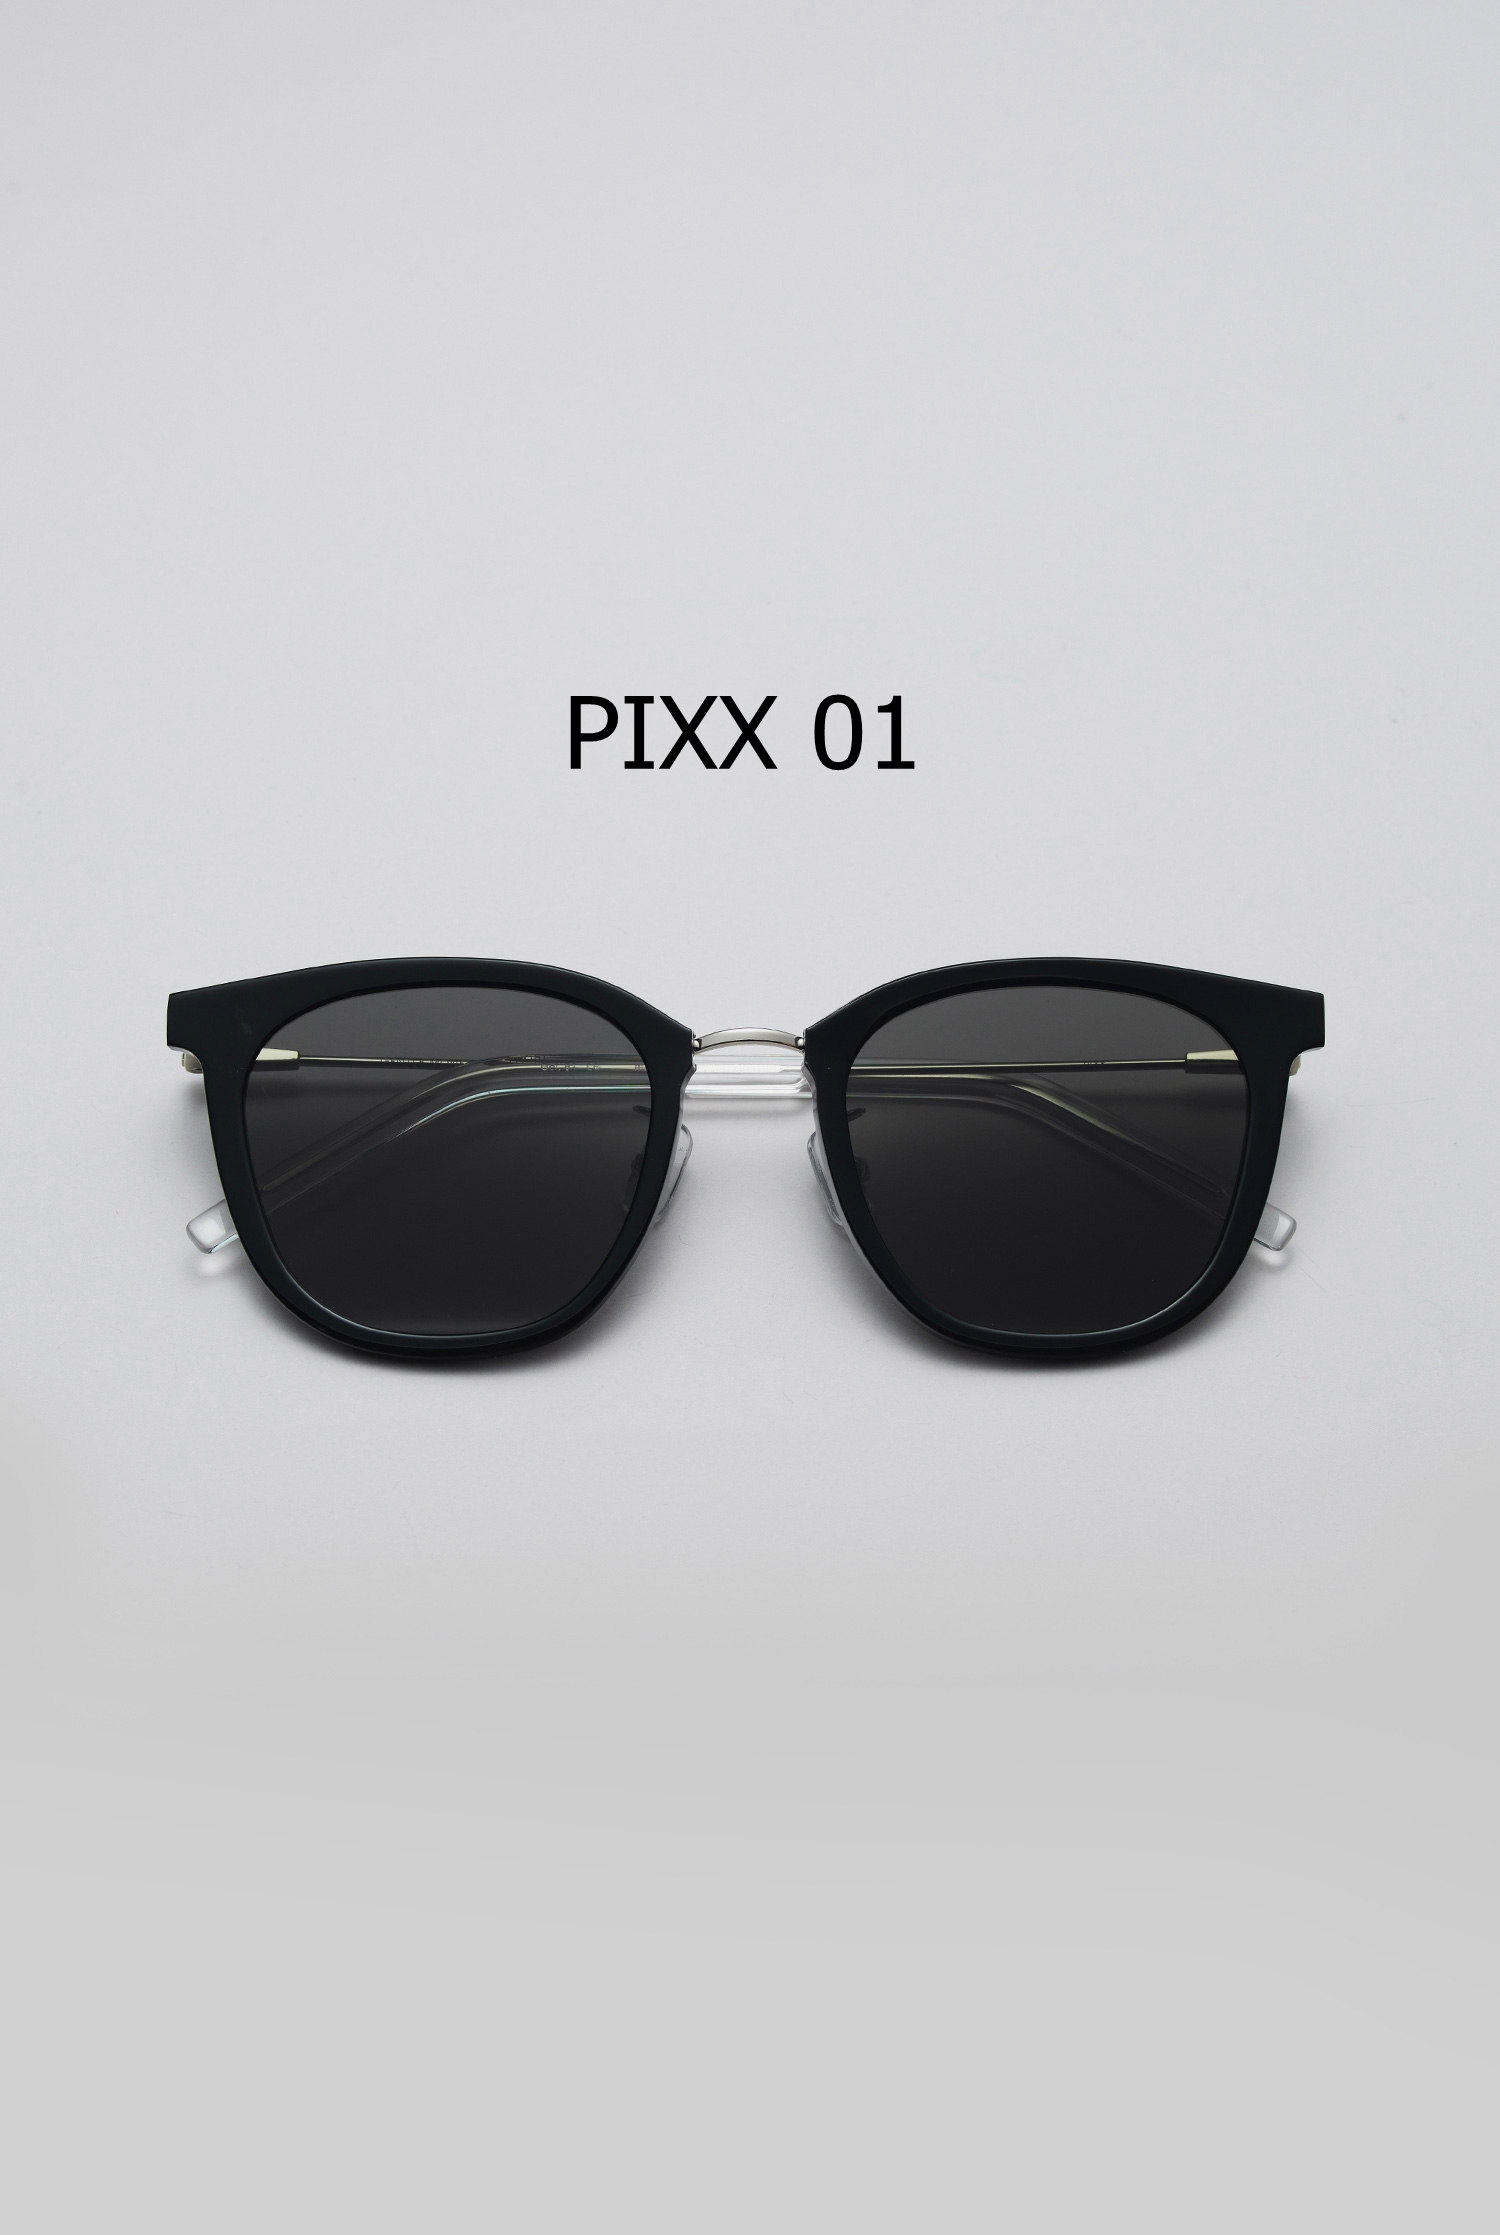 PIXX 01 